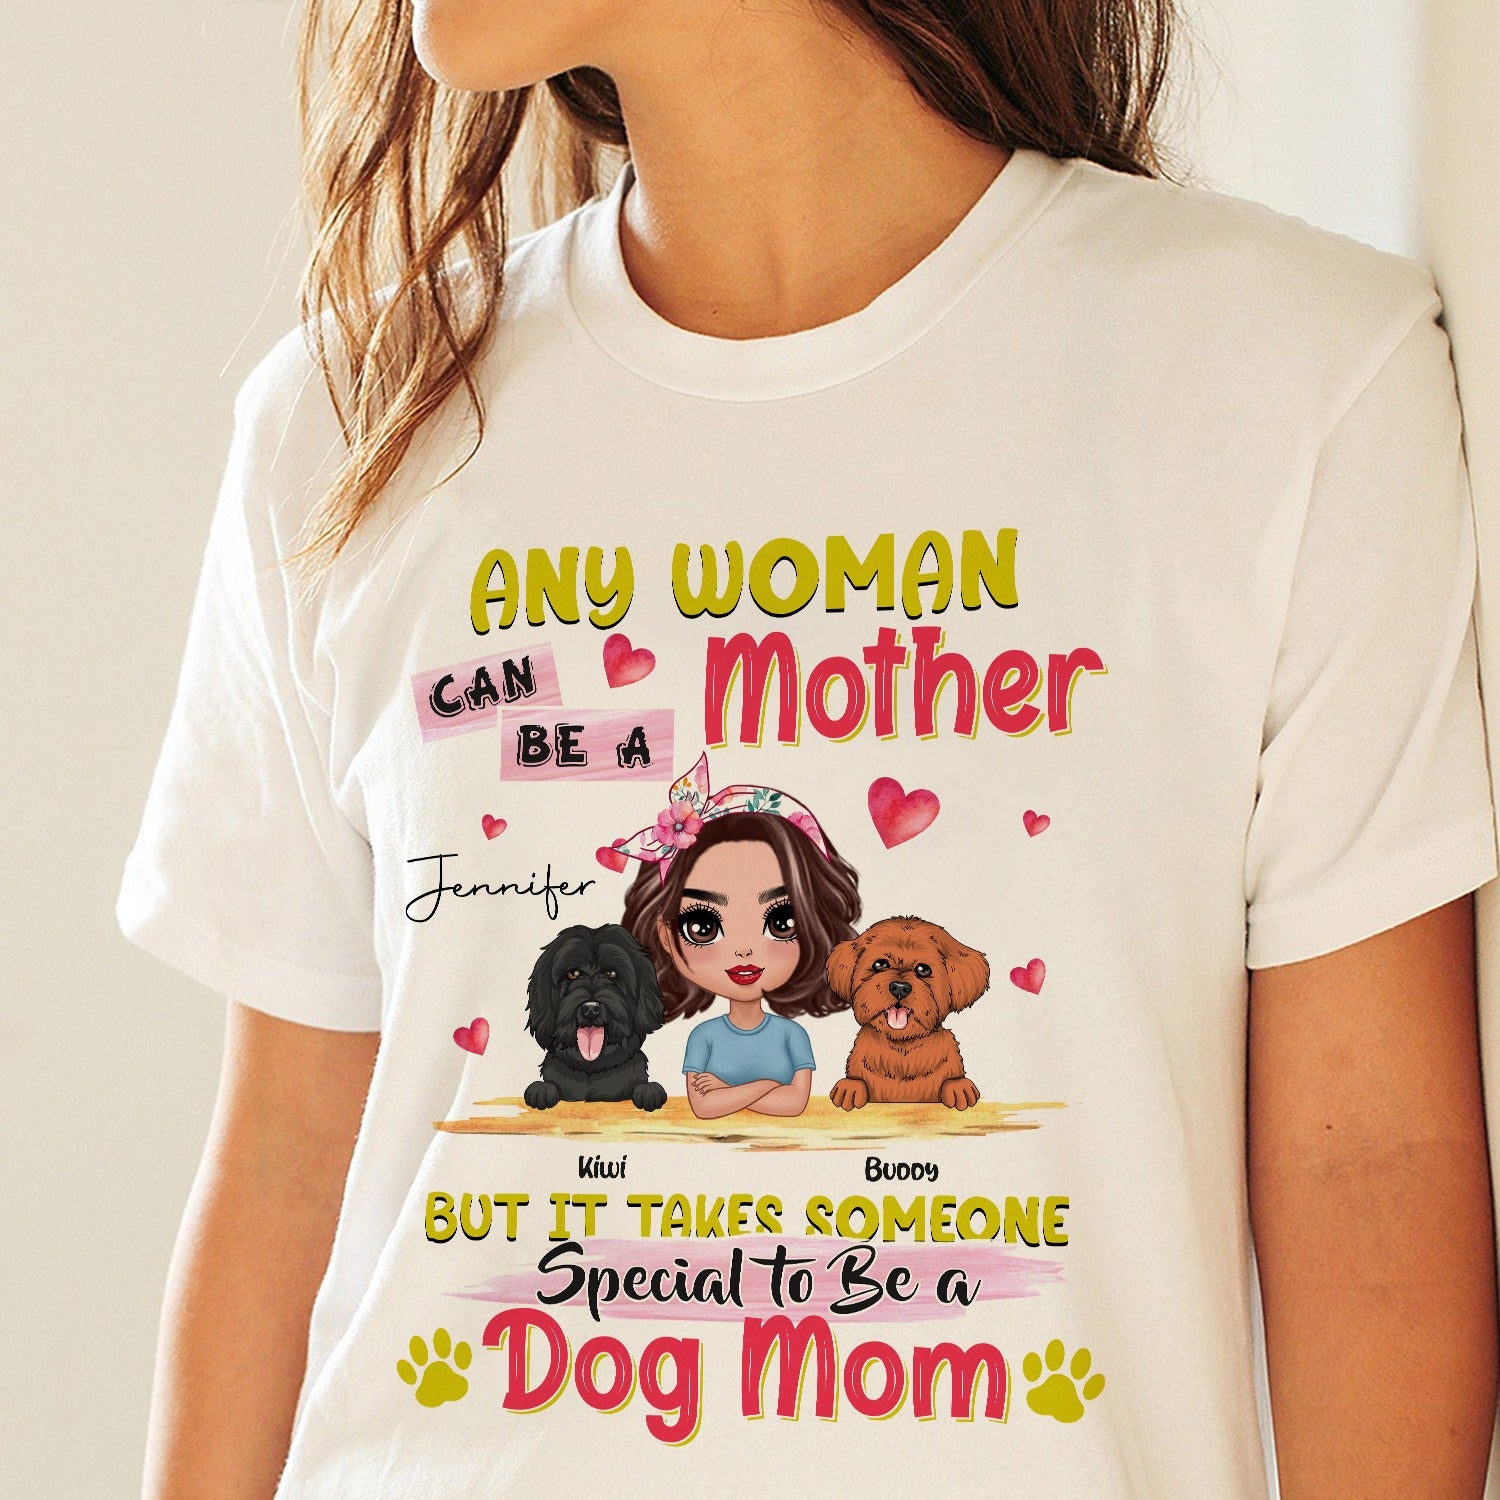 World's Best Dog Mom - Custom T-shirt Dog Lover Gifts